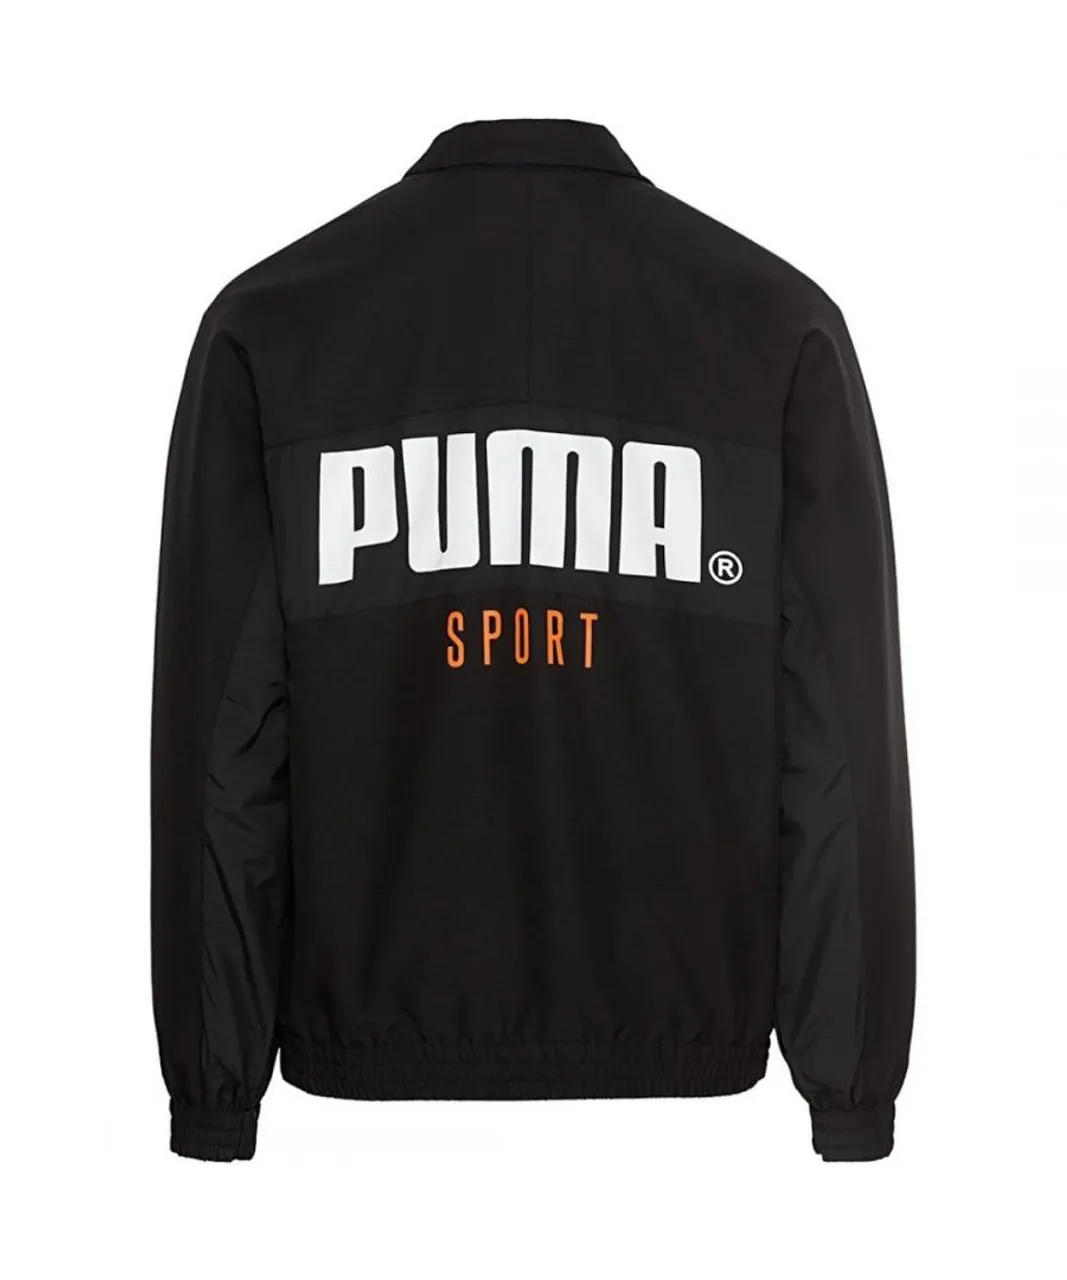 Puma Mens TFS Woven Black Jacket by